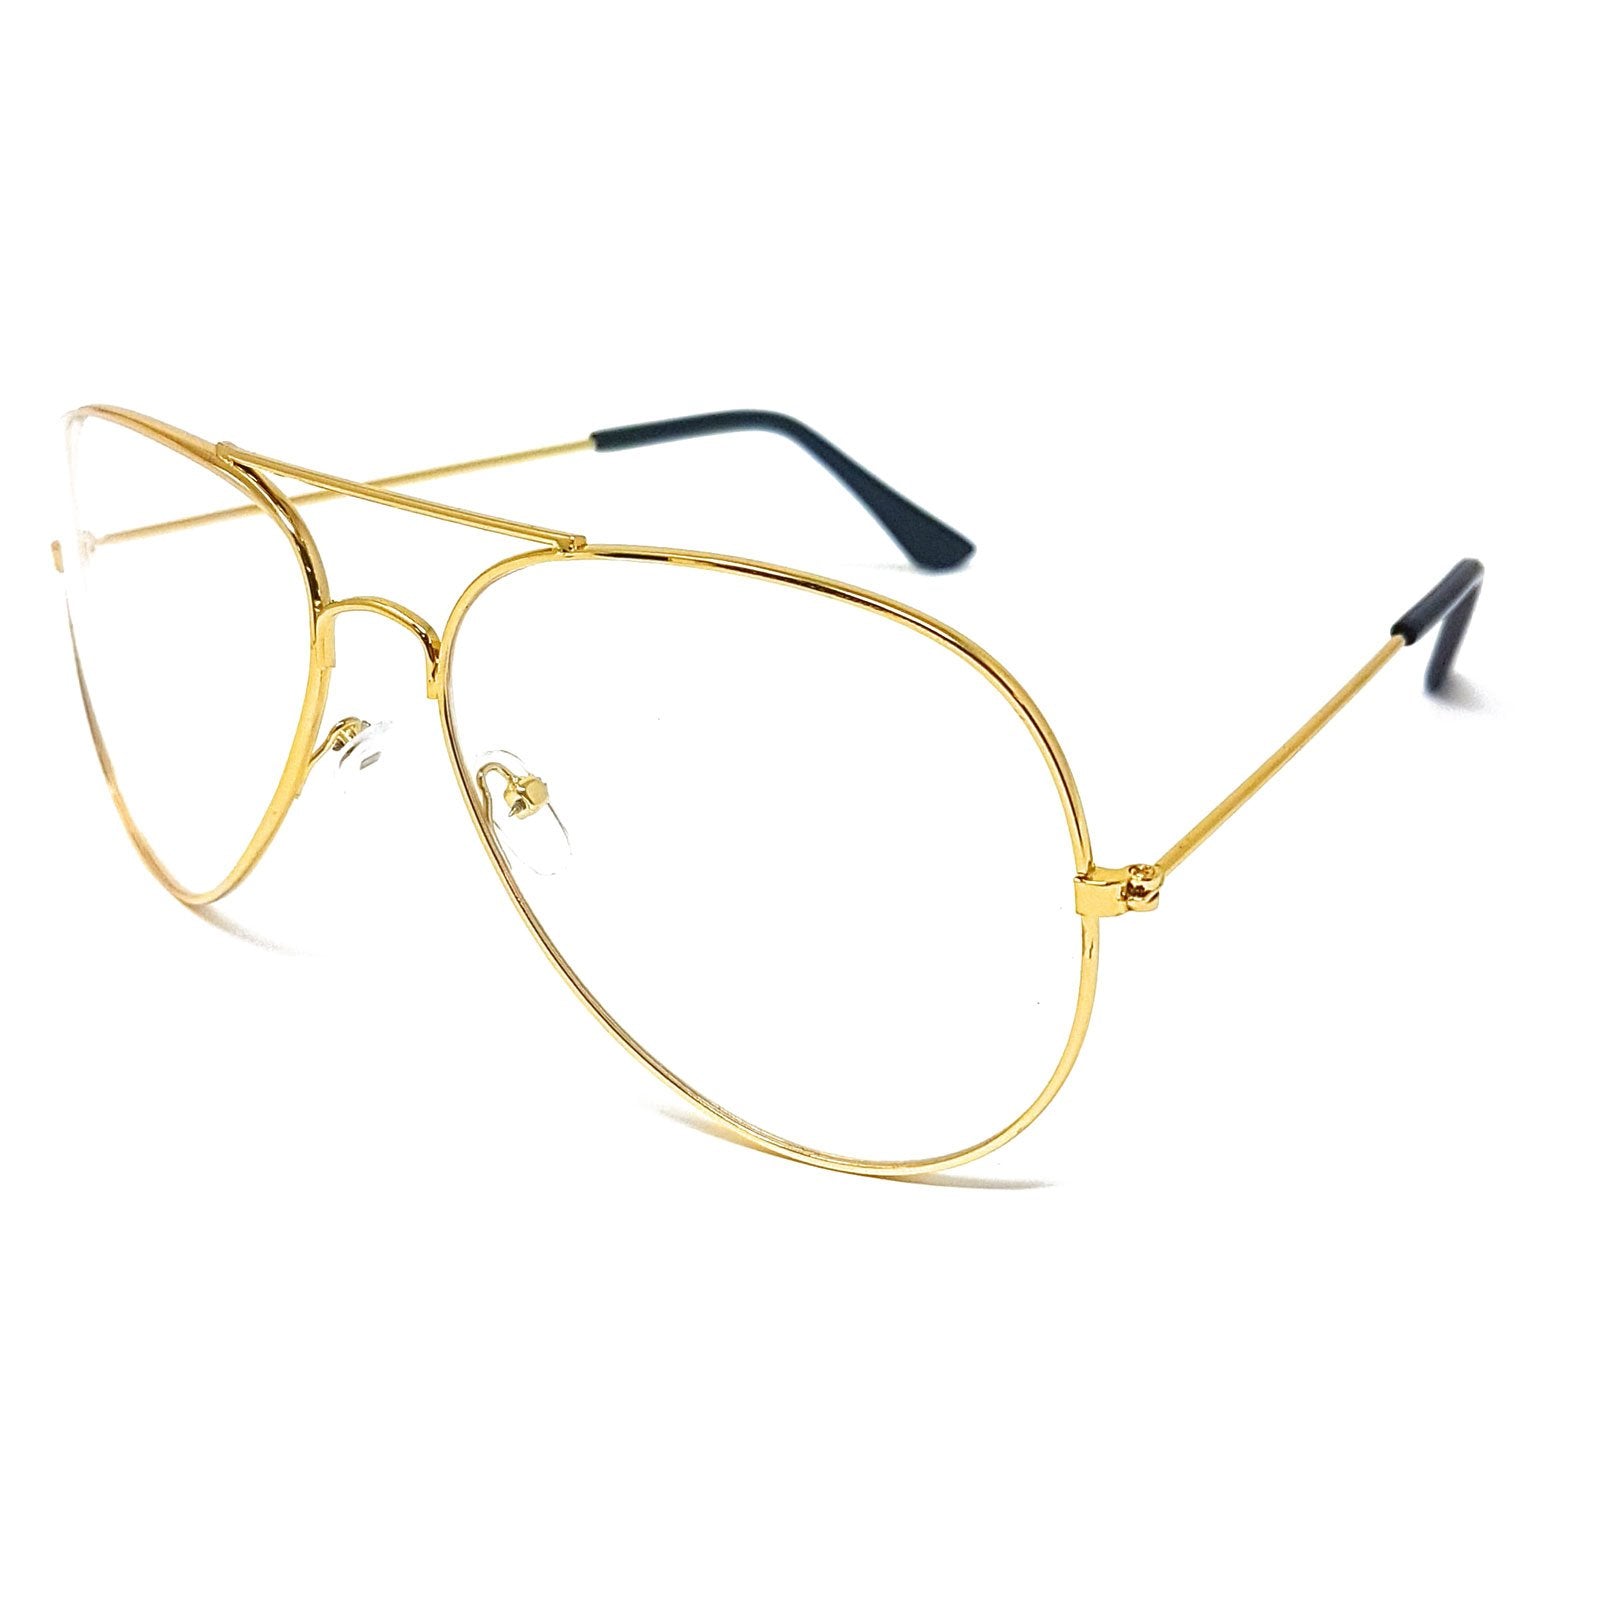 Transaprent frame sunglasses with blue lenses - Capri People - Manecapri